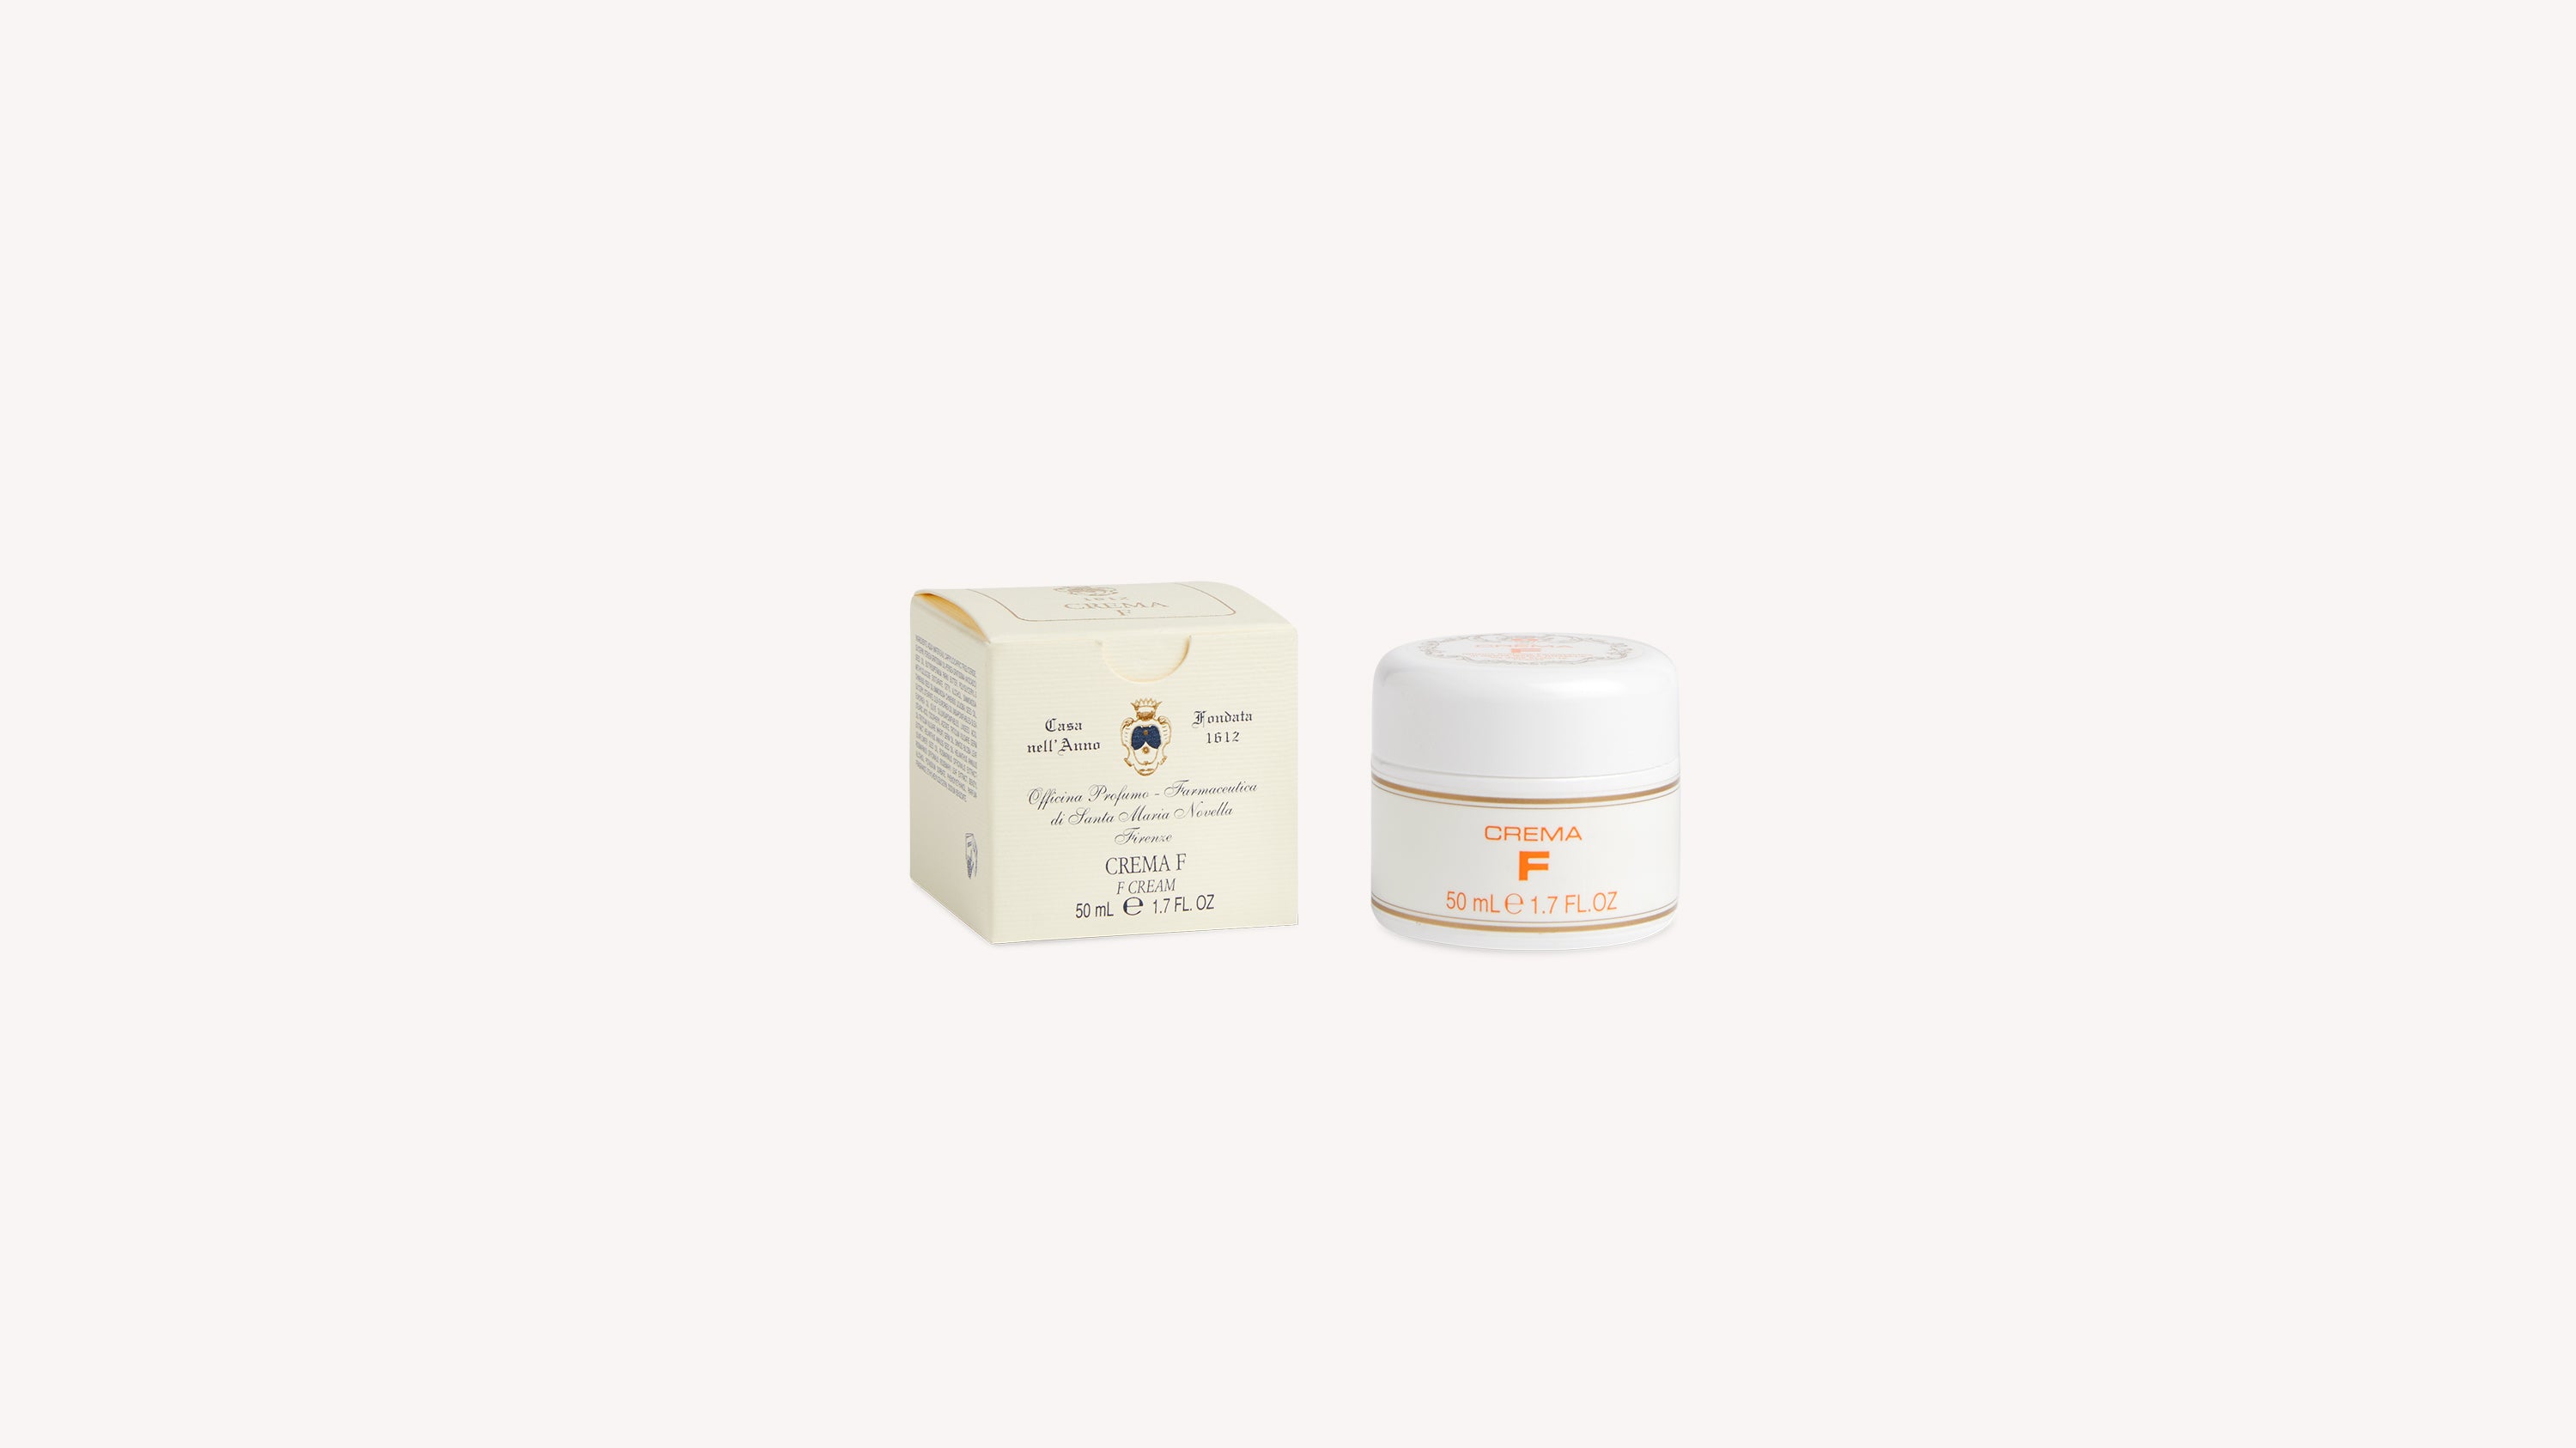 Vitamin F Cream Skin Care officina-smn-usa-ca.myshopify.com Officina Profumo Farmaceutica di Santa Maria Novella - US